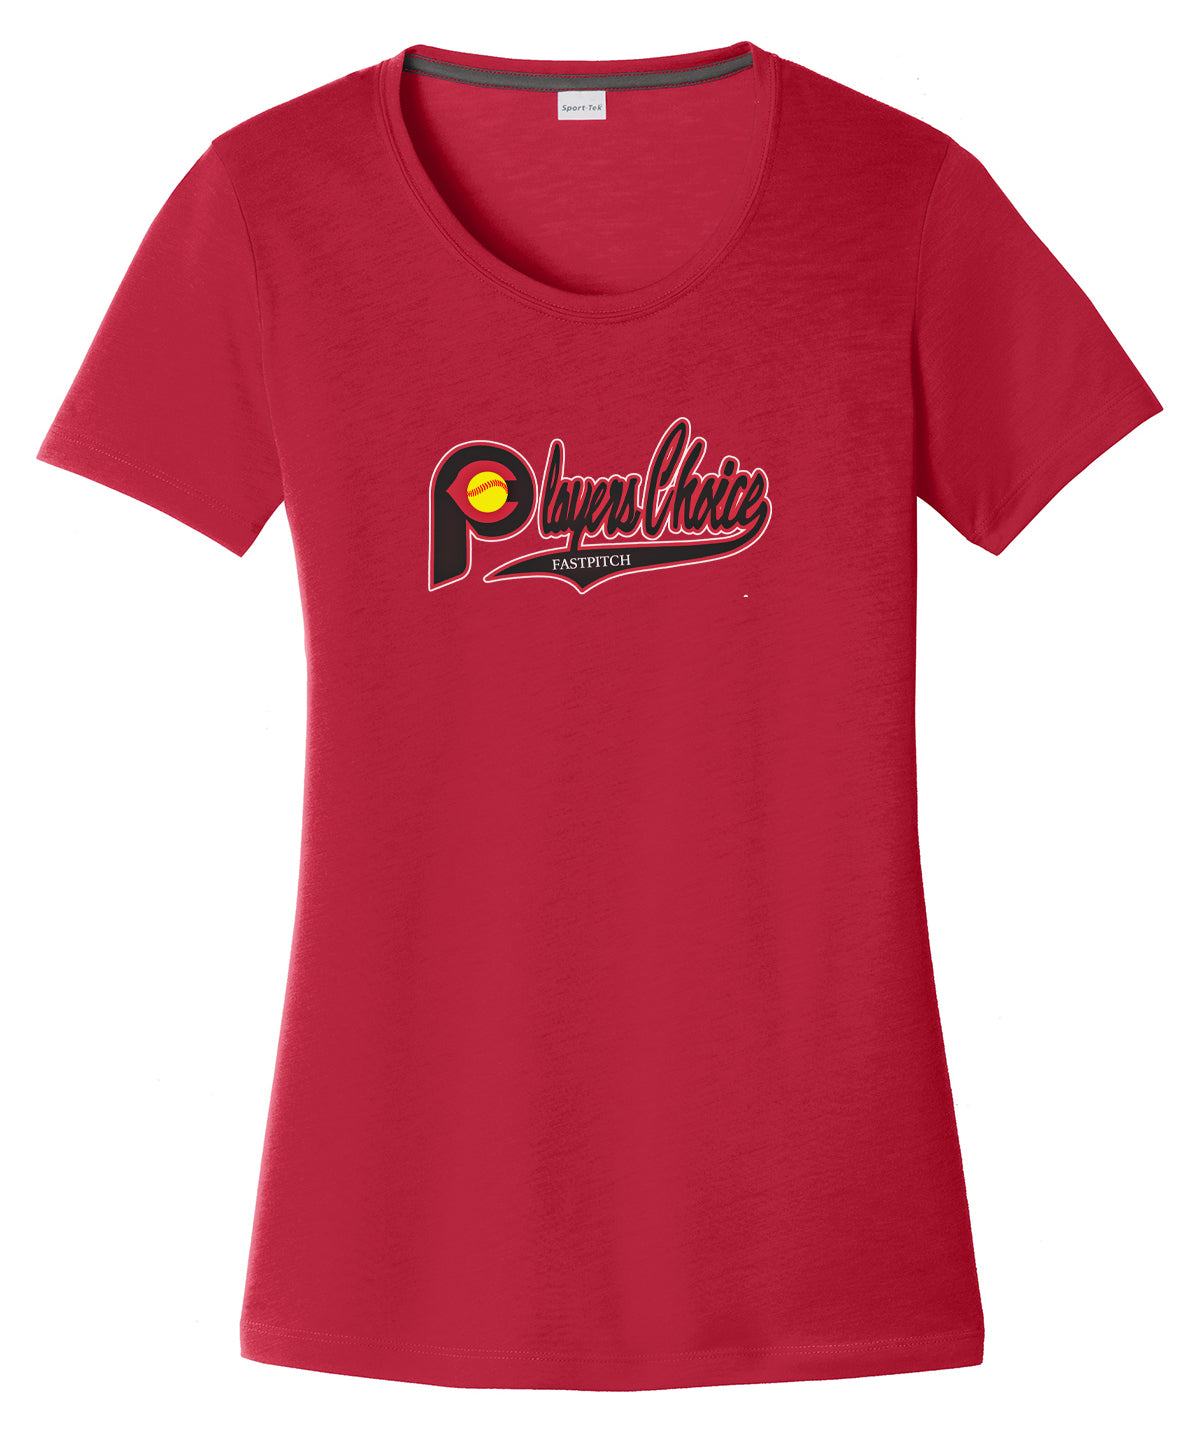 Player's Choice Academy Softball Women's CottonTouch Performance T-Shirt